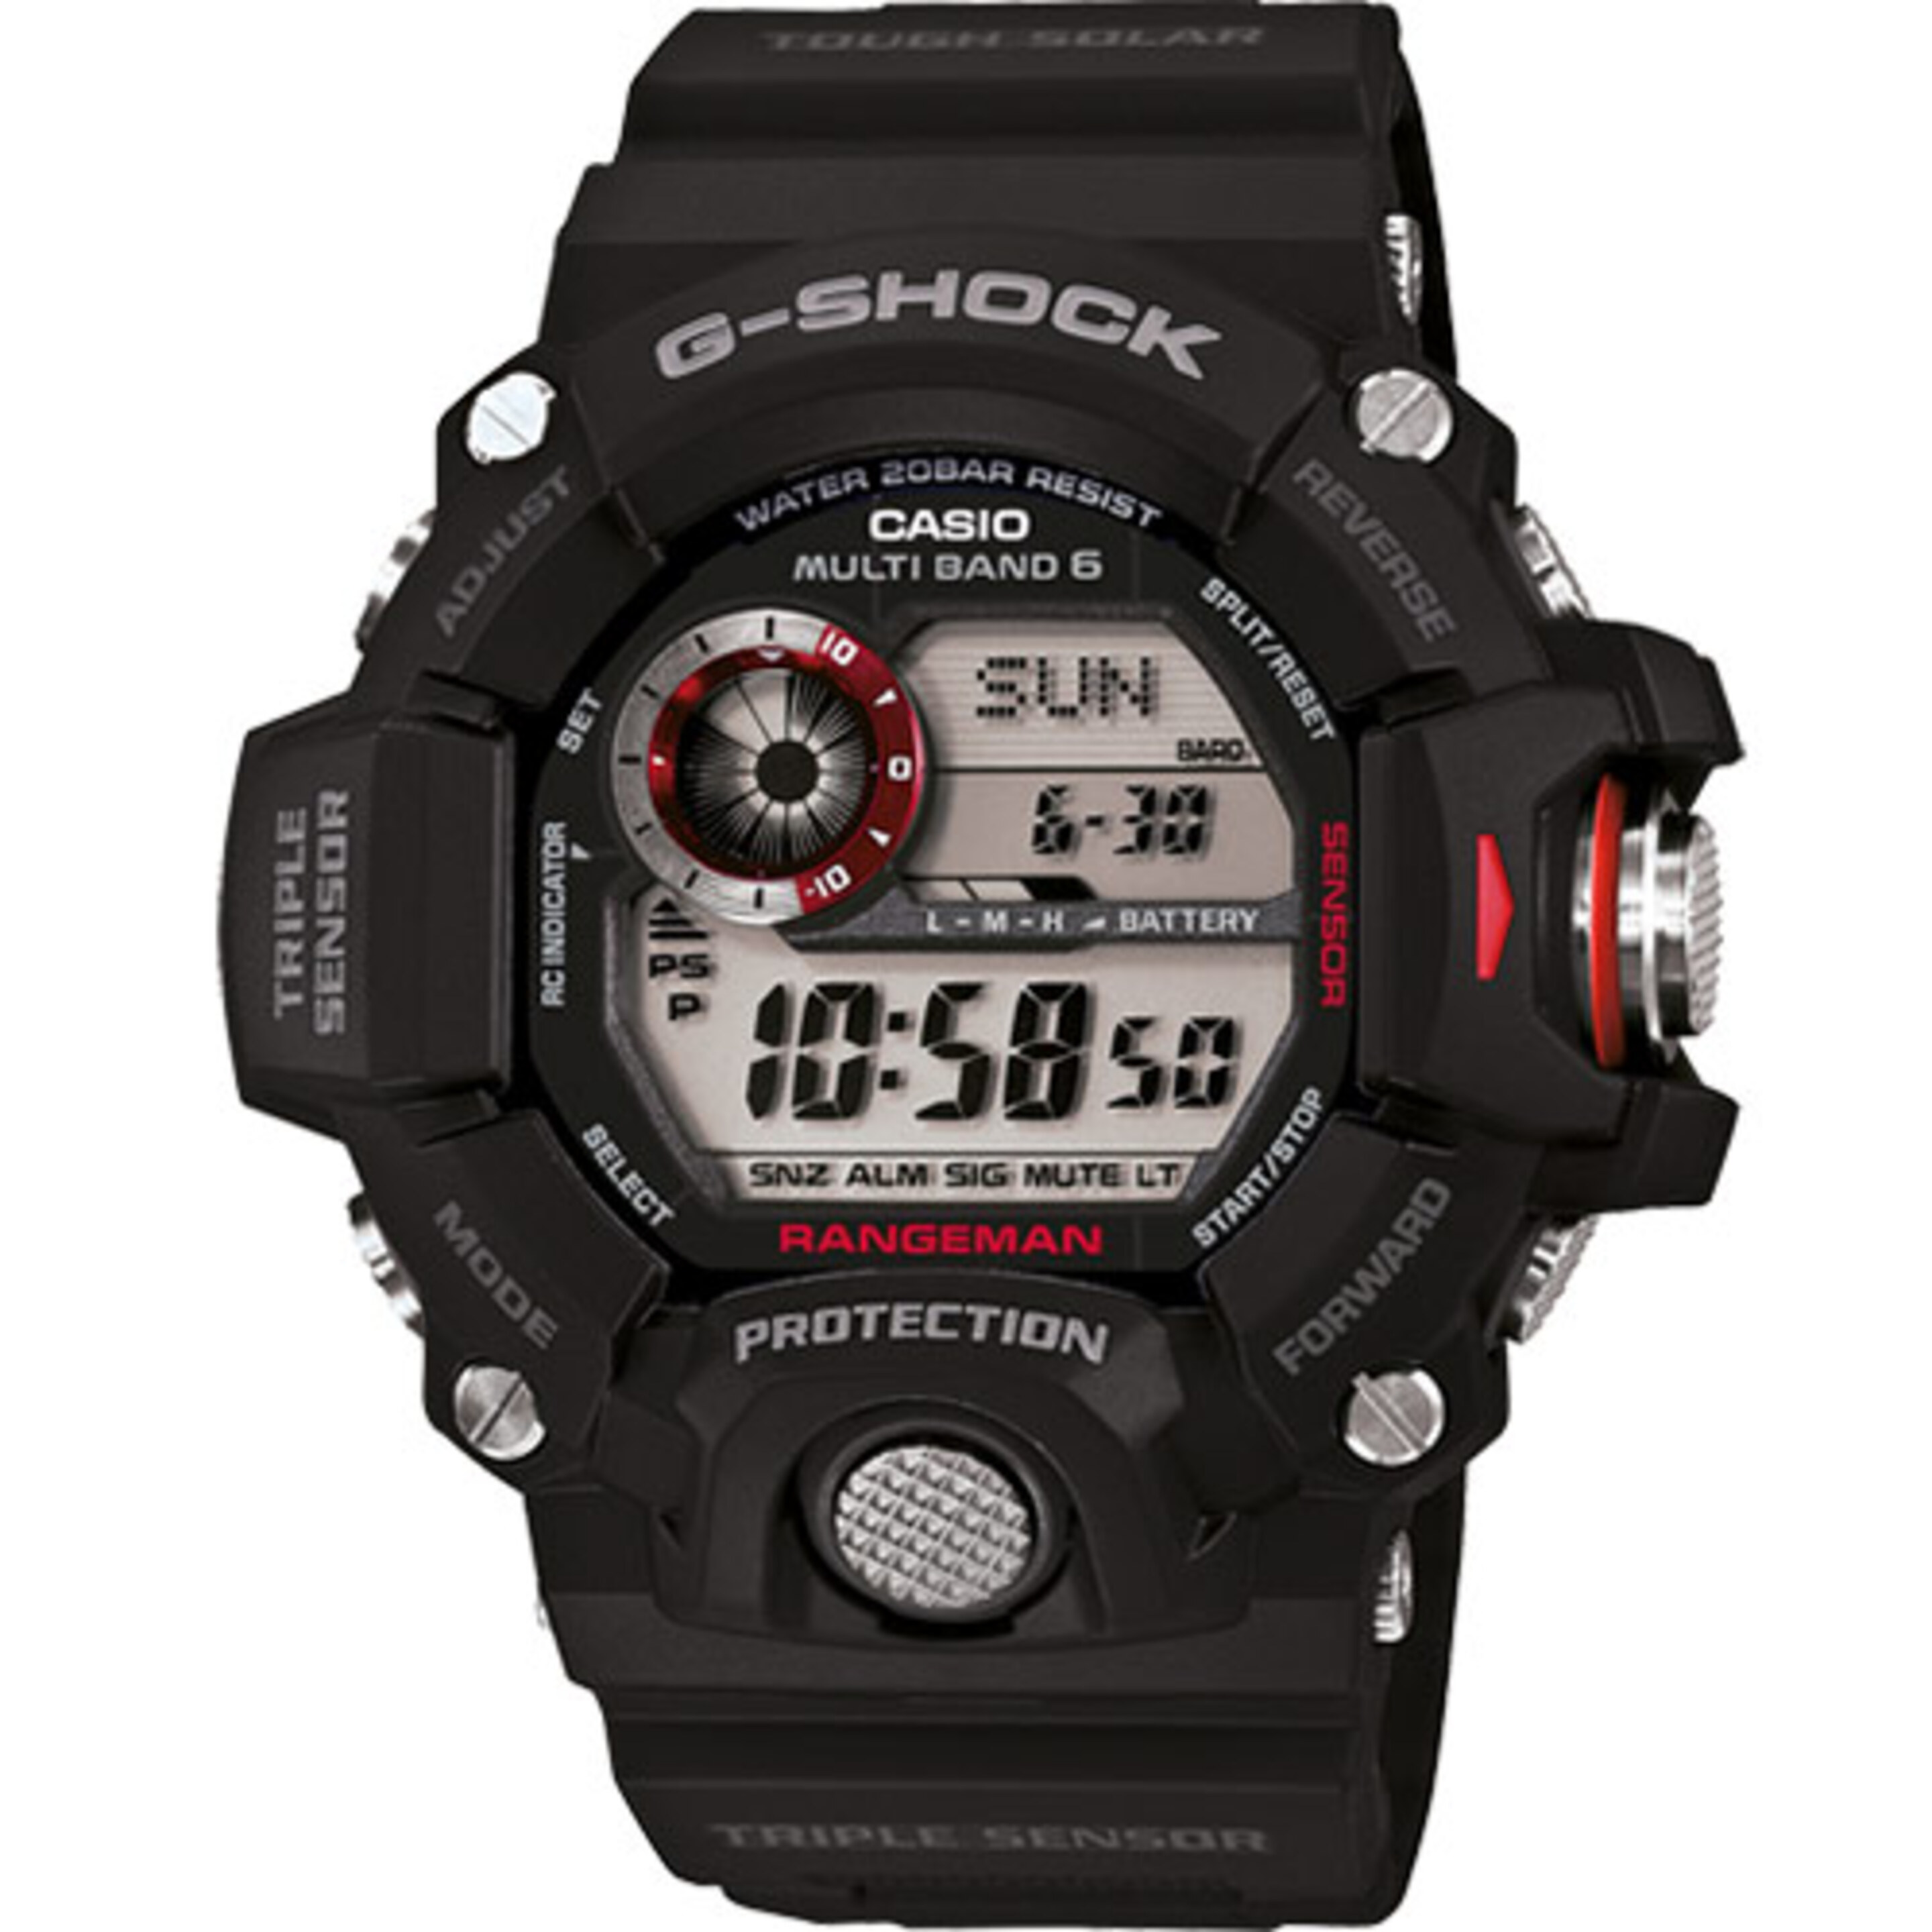 Reloj G-shock Rangeman Gw-9400-1er - negro - 